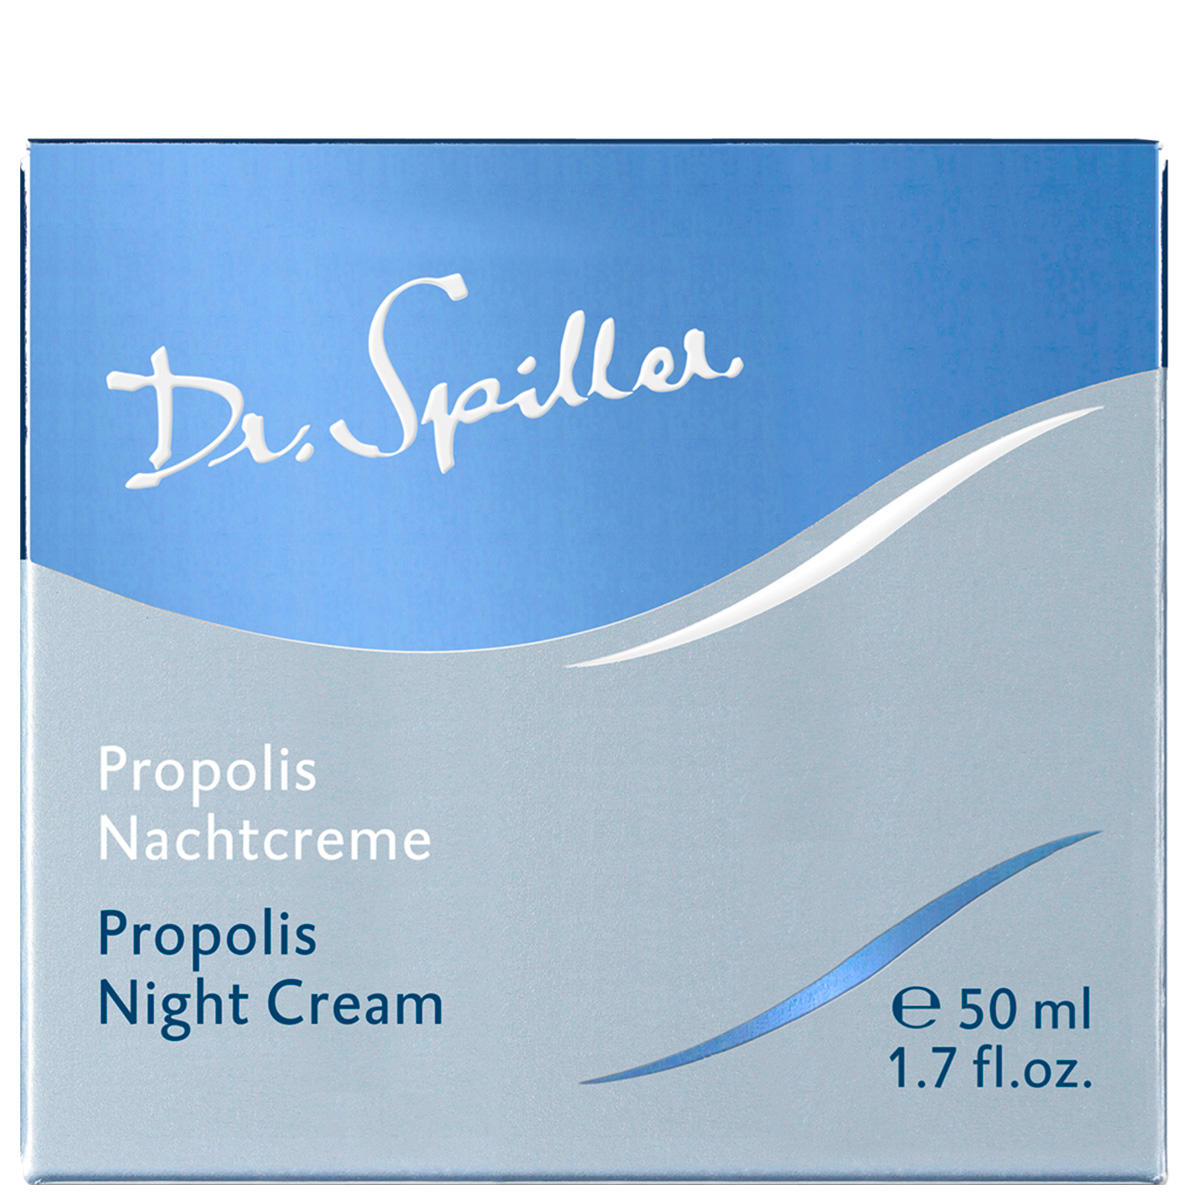 Dr. Spiller Biomimetic SkinCare Propolis Nachtcreme 50 ml - 3